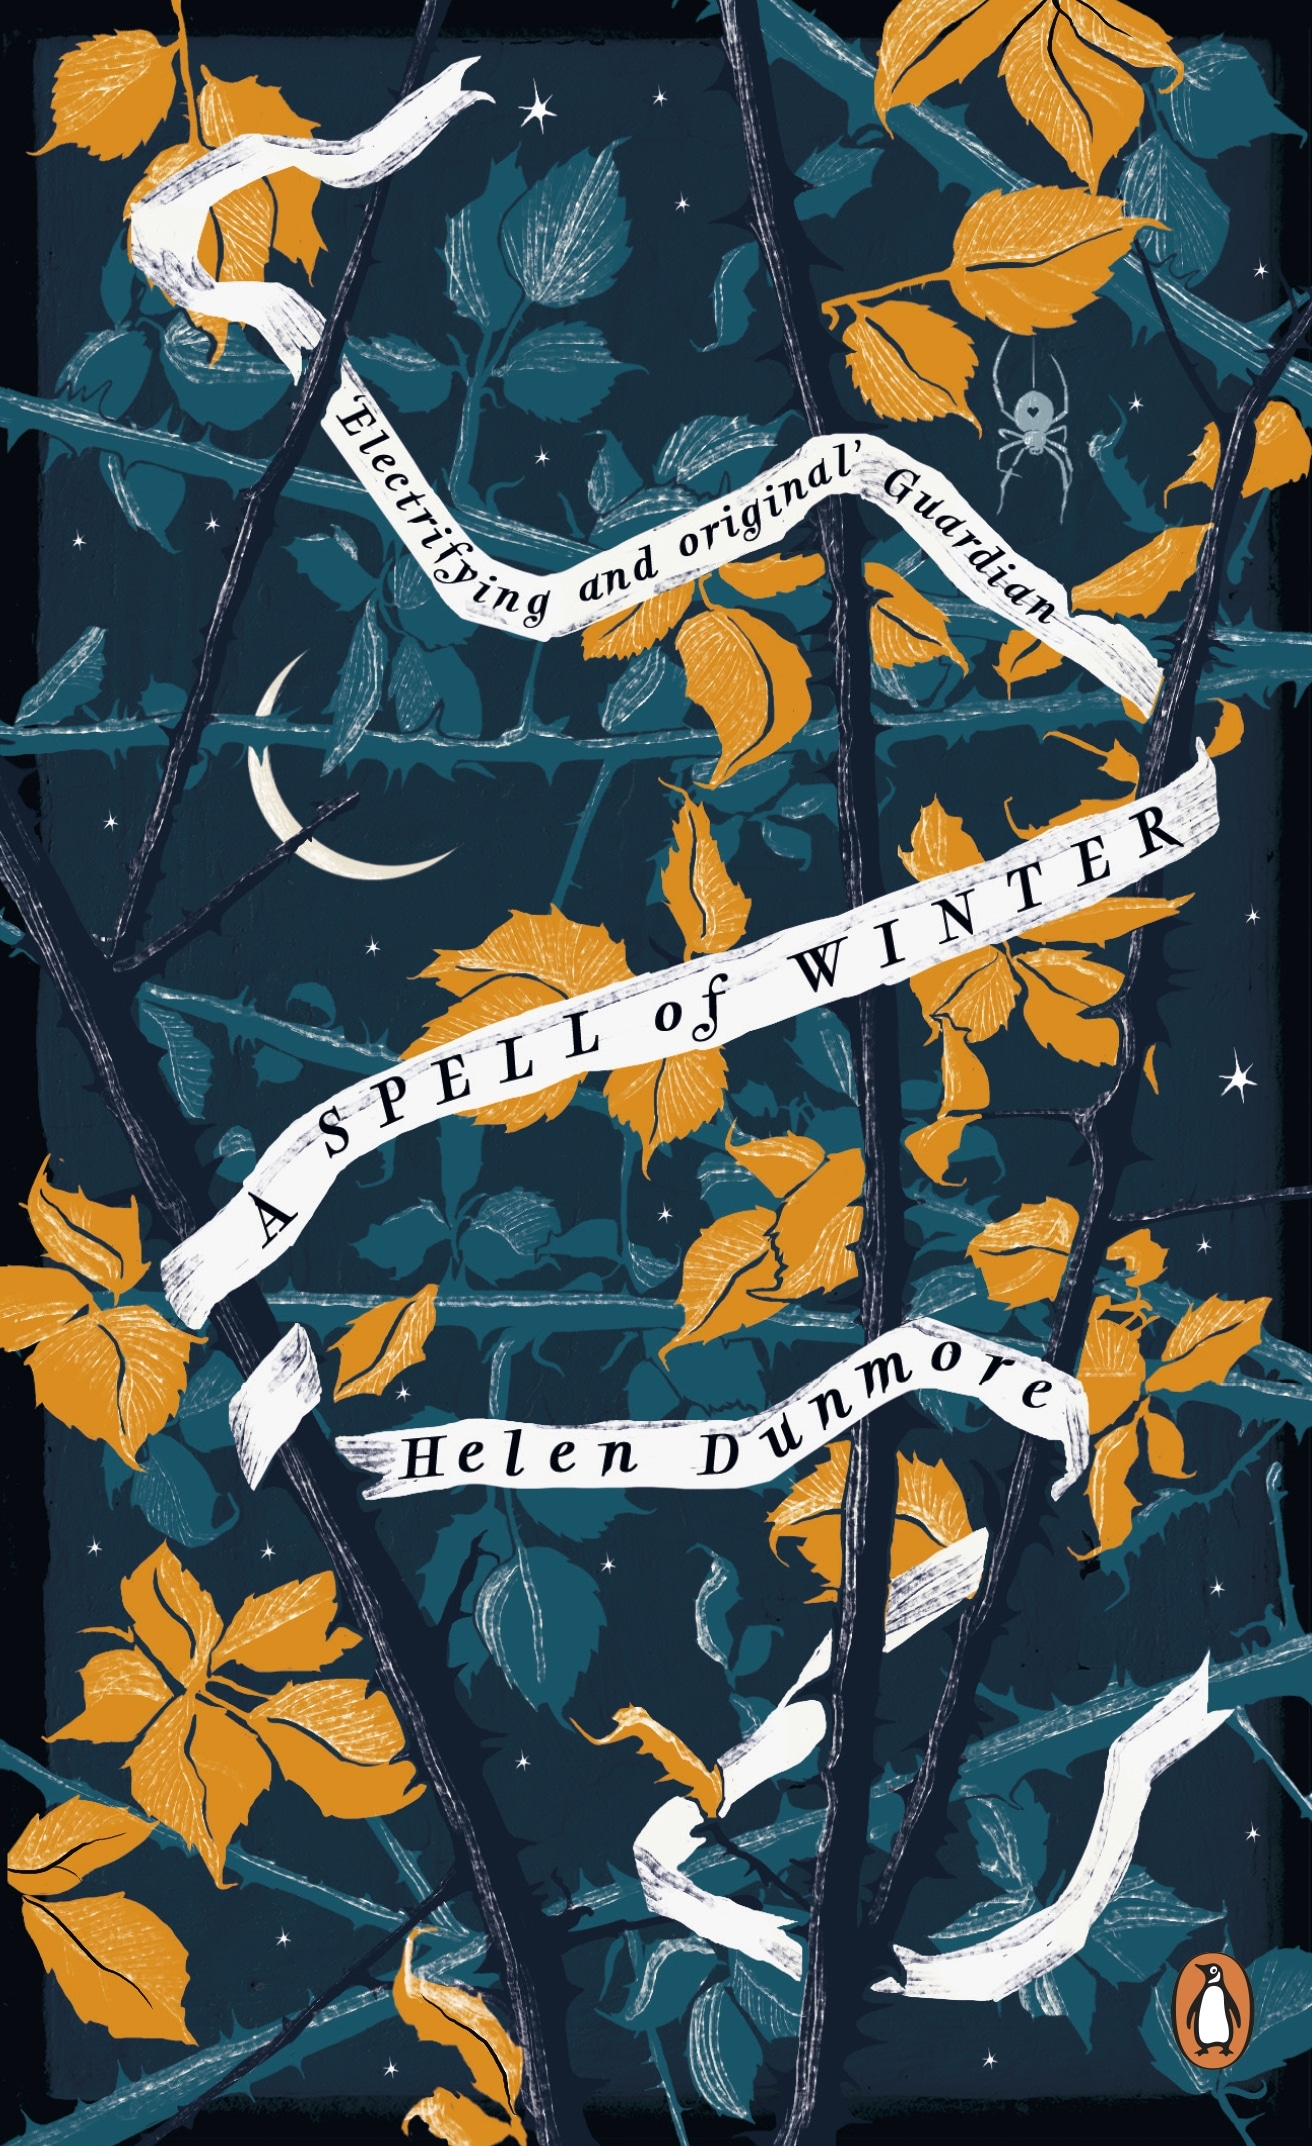 Book “A Spell of Winter” by Helen Dunmore — June 6, 2019